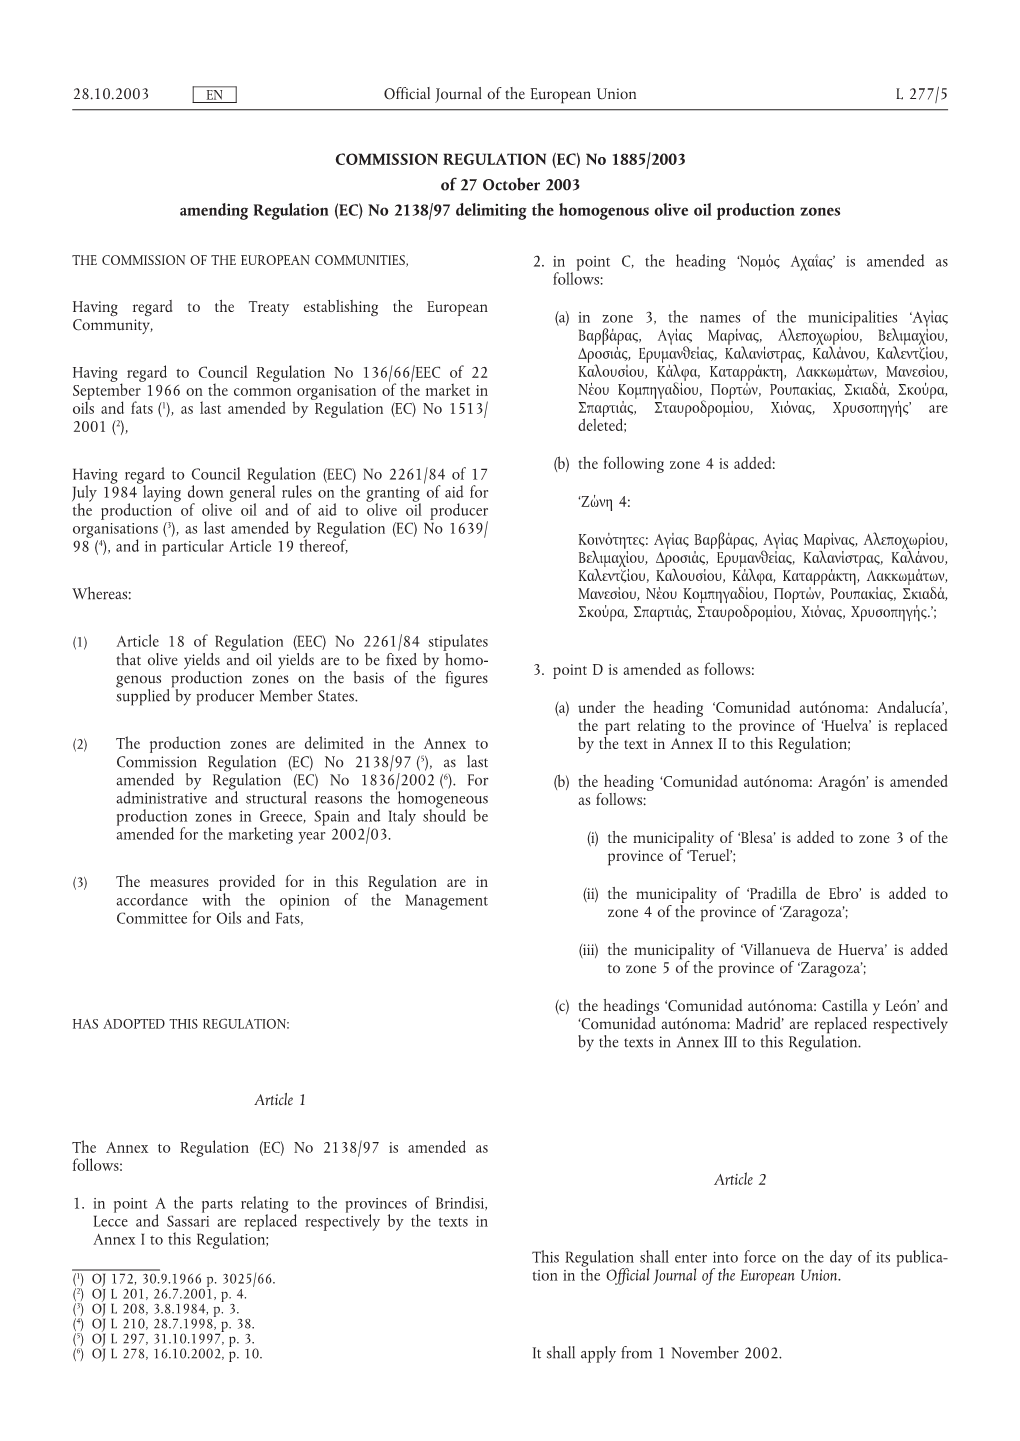 COMMISSION REGULATION (EC) No 1885/2003 of 27 October 2003 Amending Regulation (EC) No 2138/97 Delimiting the Homogenous Olive Oil Production Zones